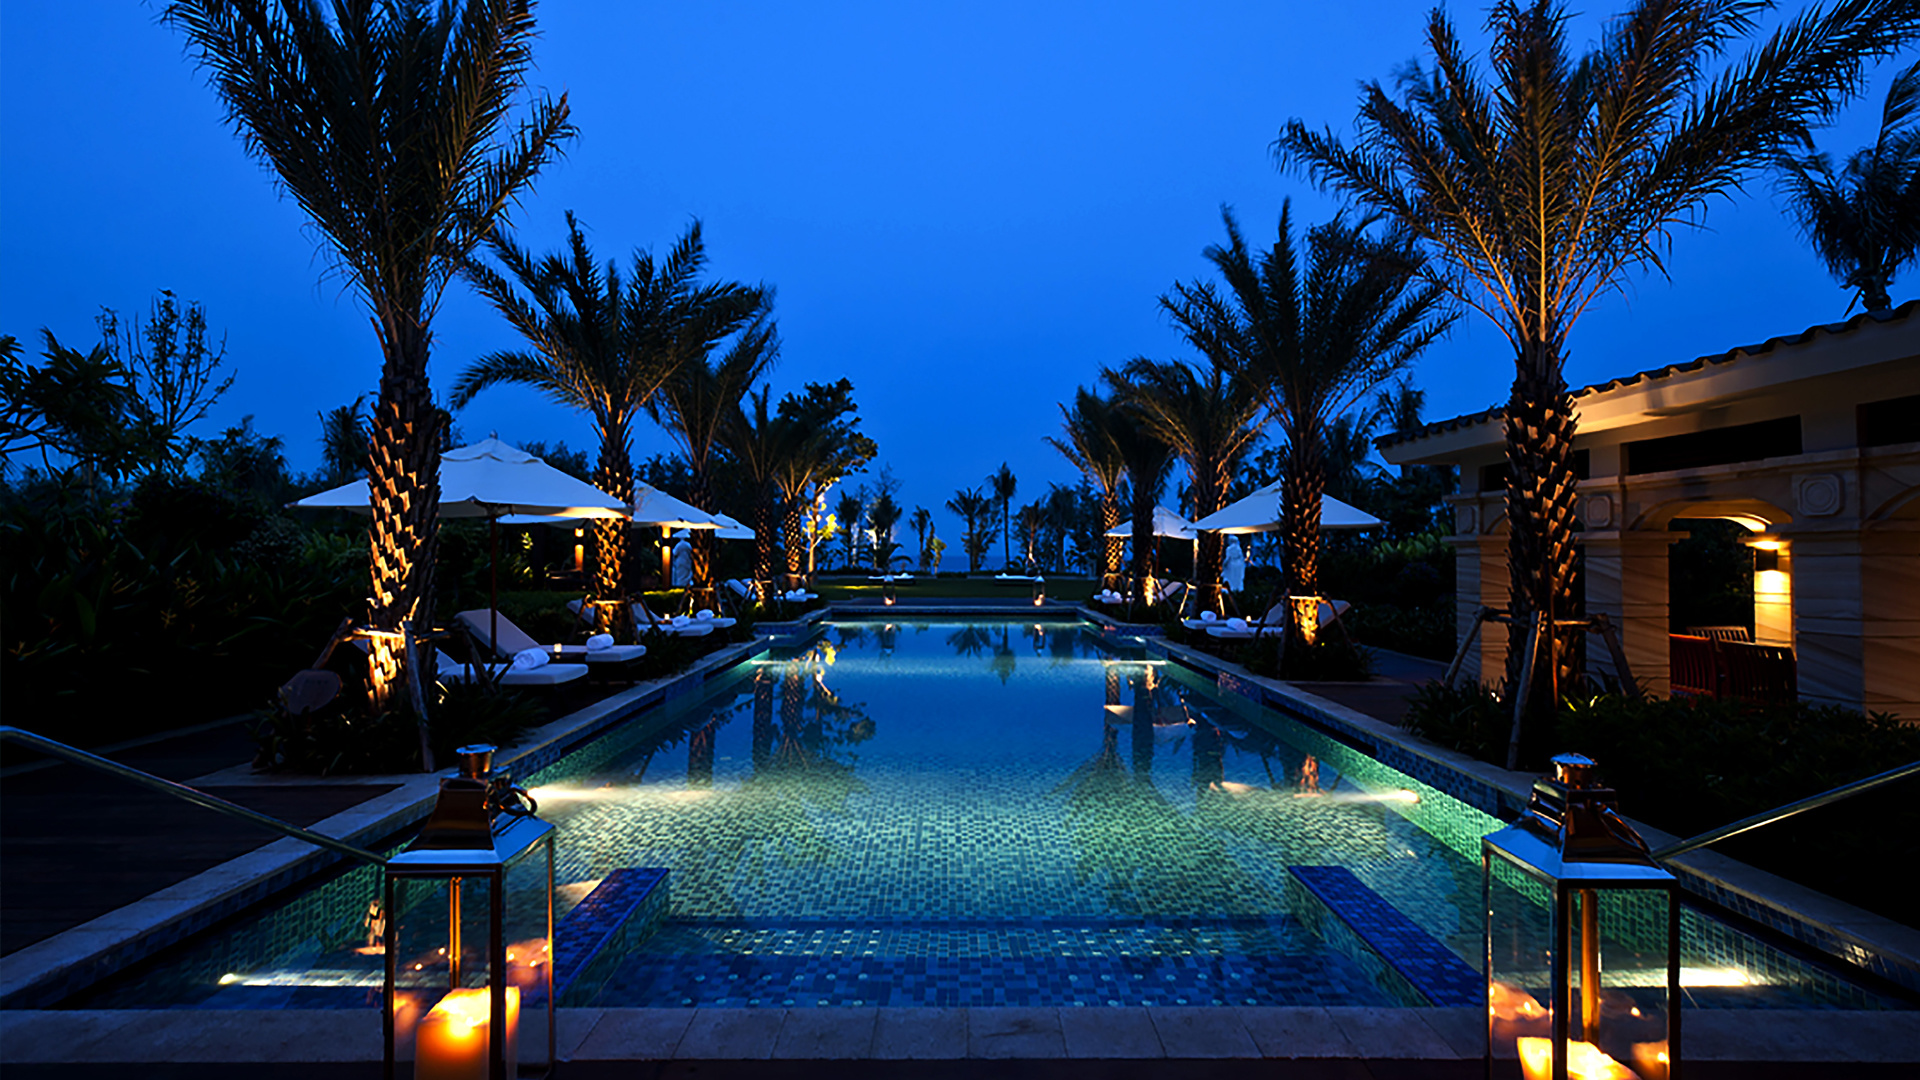 Wanda Hilton Conrad Hotel / Five Star Doubletree Resort